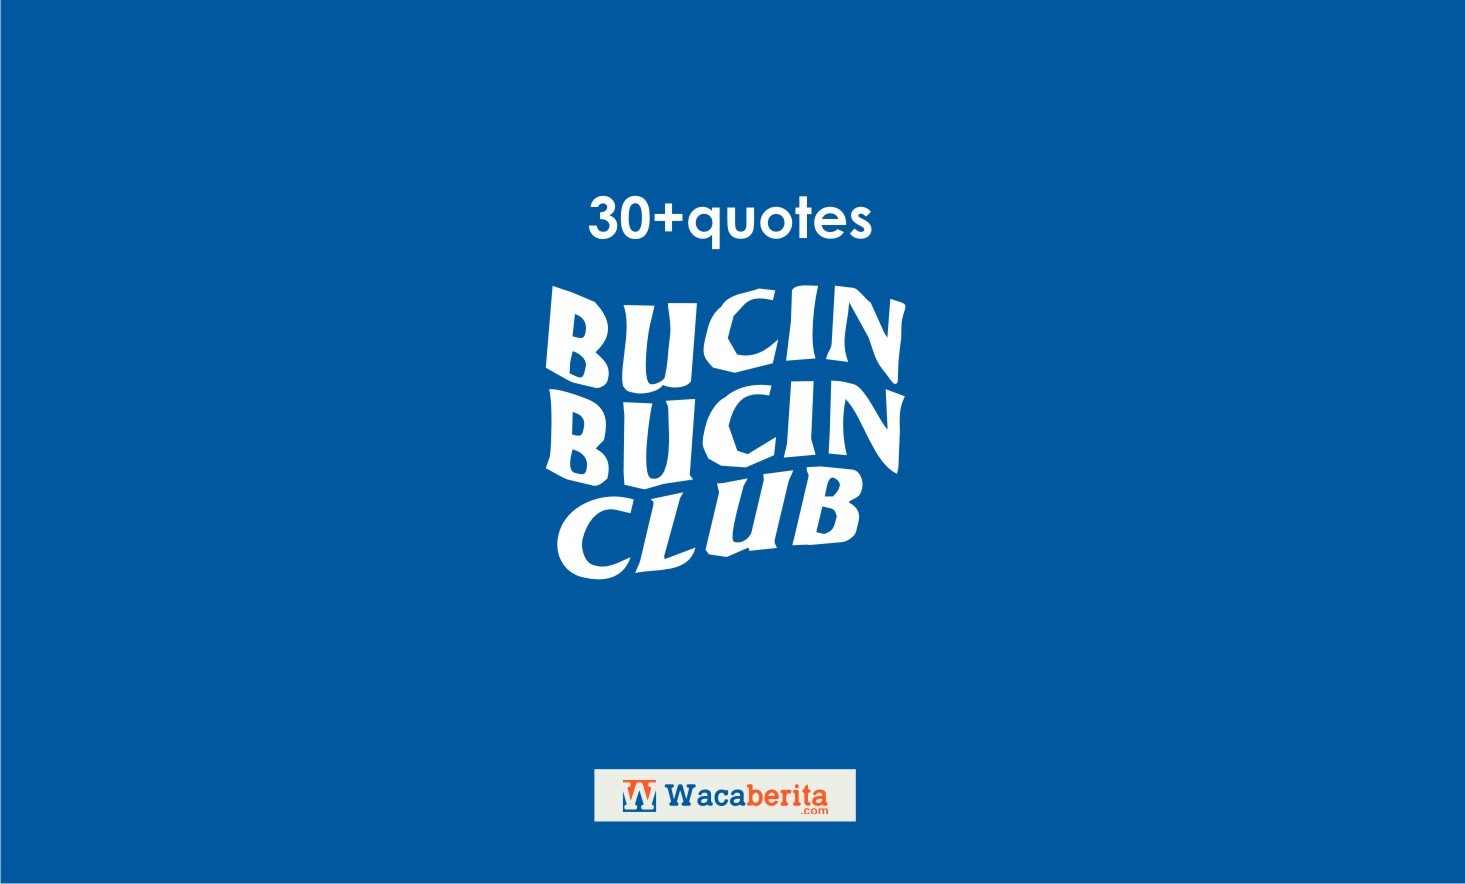 30+ quotes bucin - bucin club